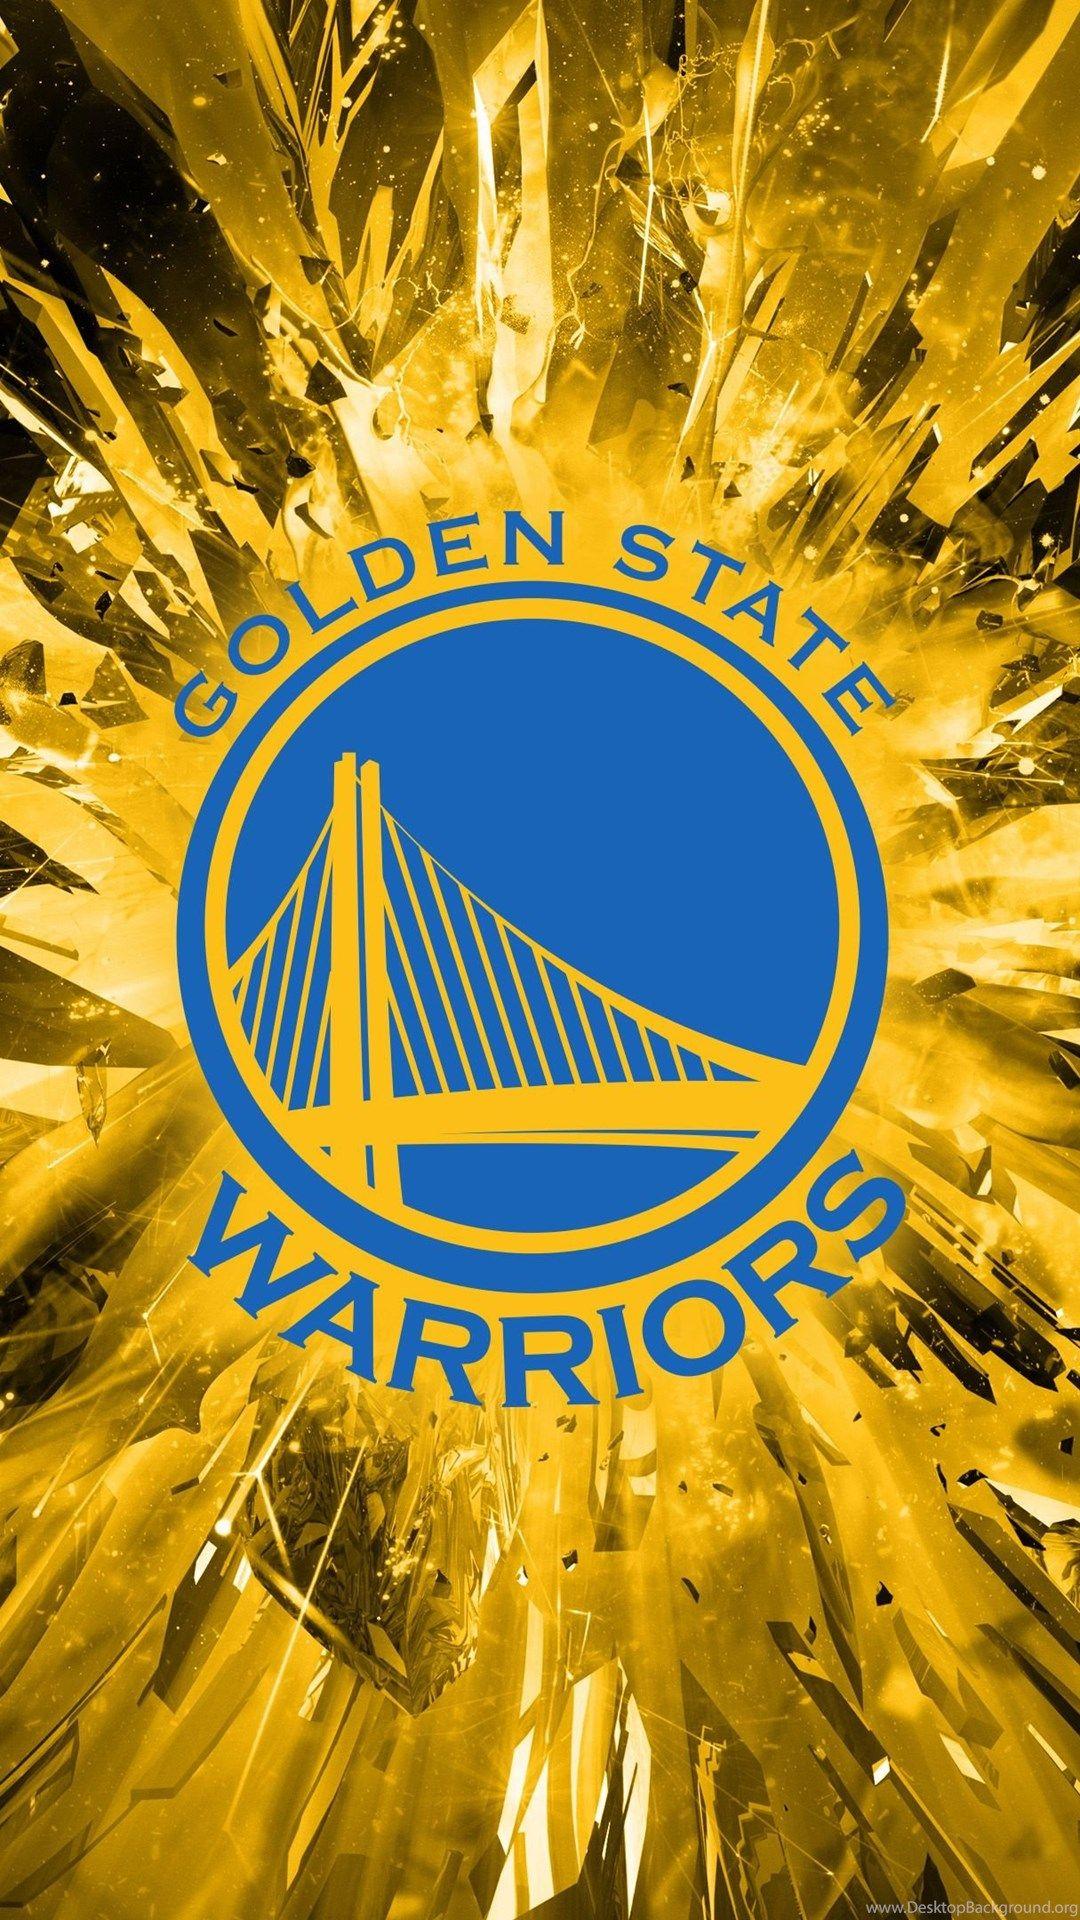 Golden State Warriors Logo 2014 Wallpaper. Desktop Background